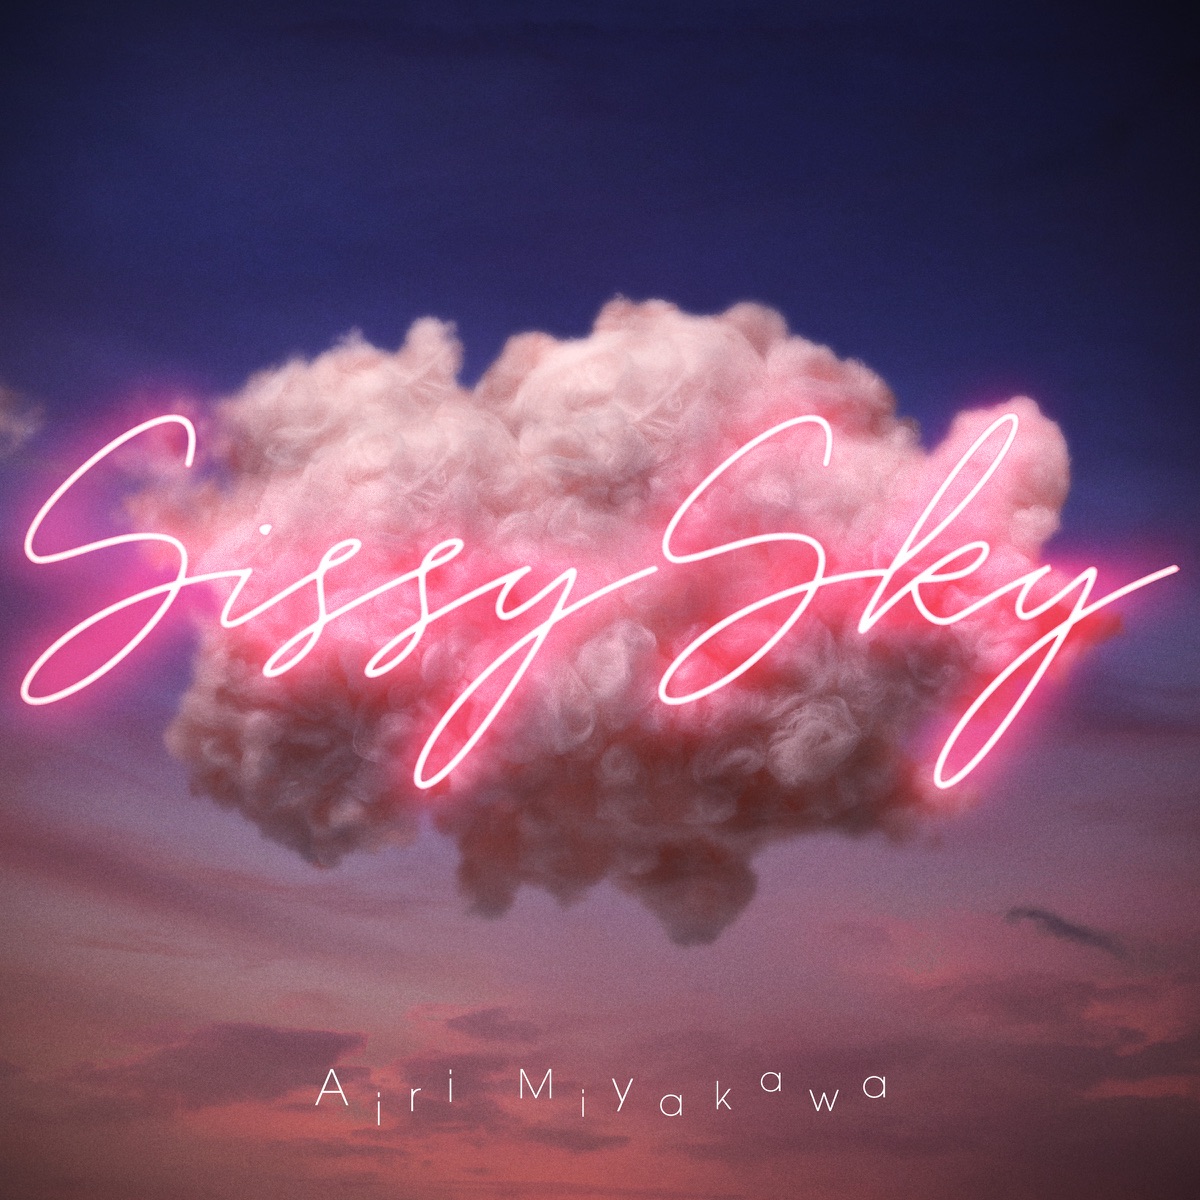 Cover art for『Airi Miyakawa - Sissy Sky』from the release『Sissy Sky